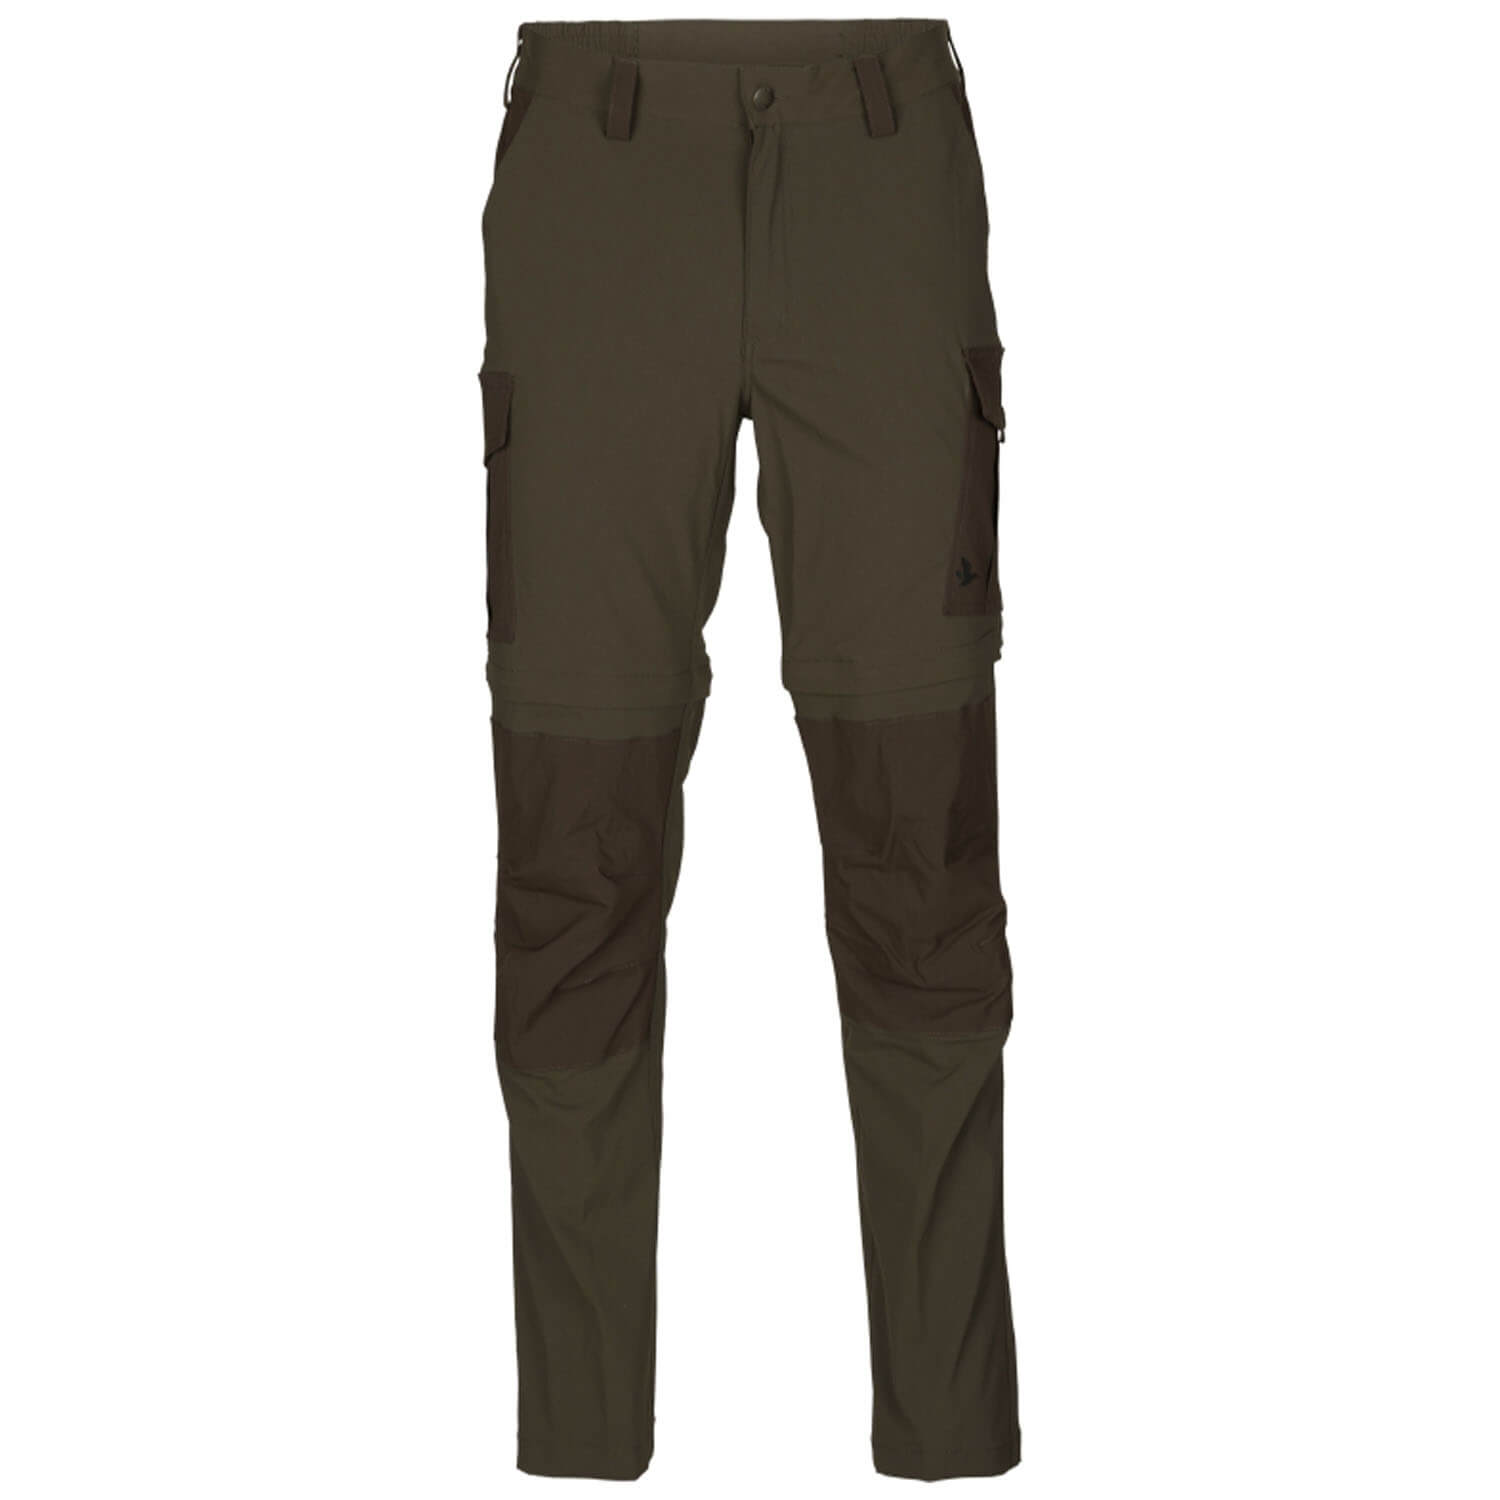 Seeland Zip-Off Trousers Birch (pine green/demitasse brown) - Hunting Trousers